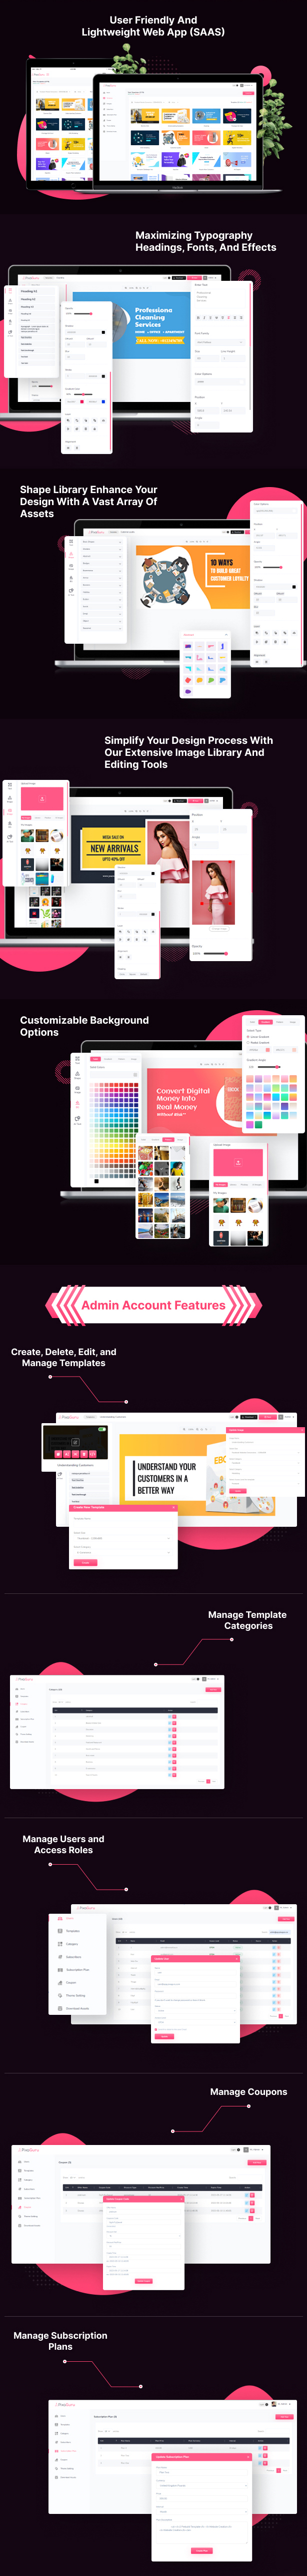 PixaGuru - SAAS Platform to Create Graphics, Images, Social Media Posts, Ads, Banners, & Stories - 4